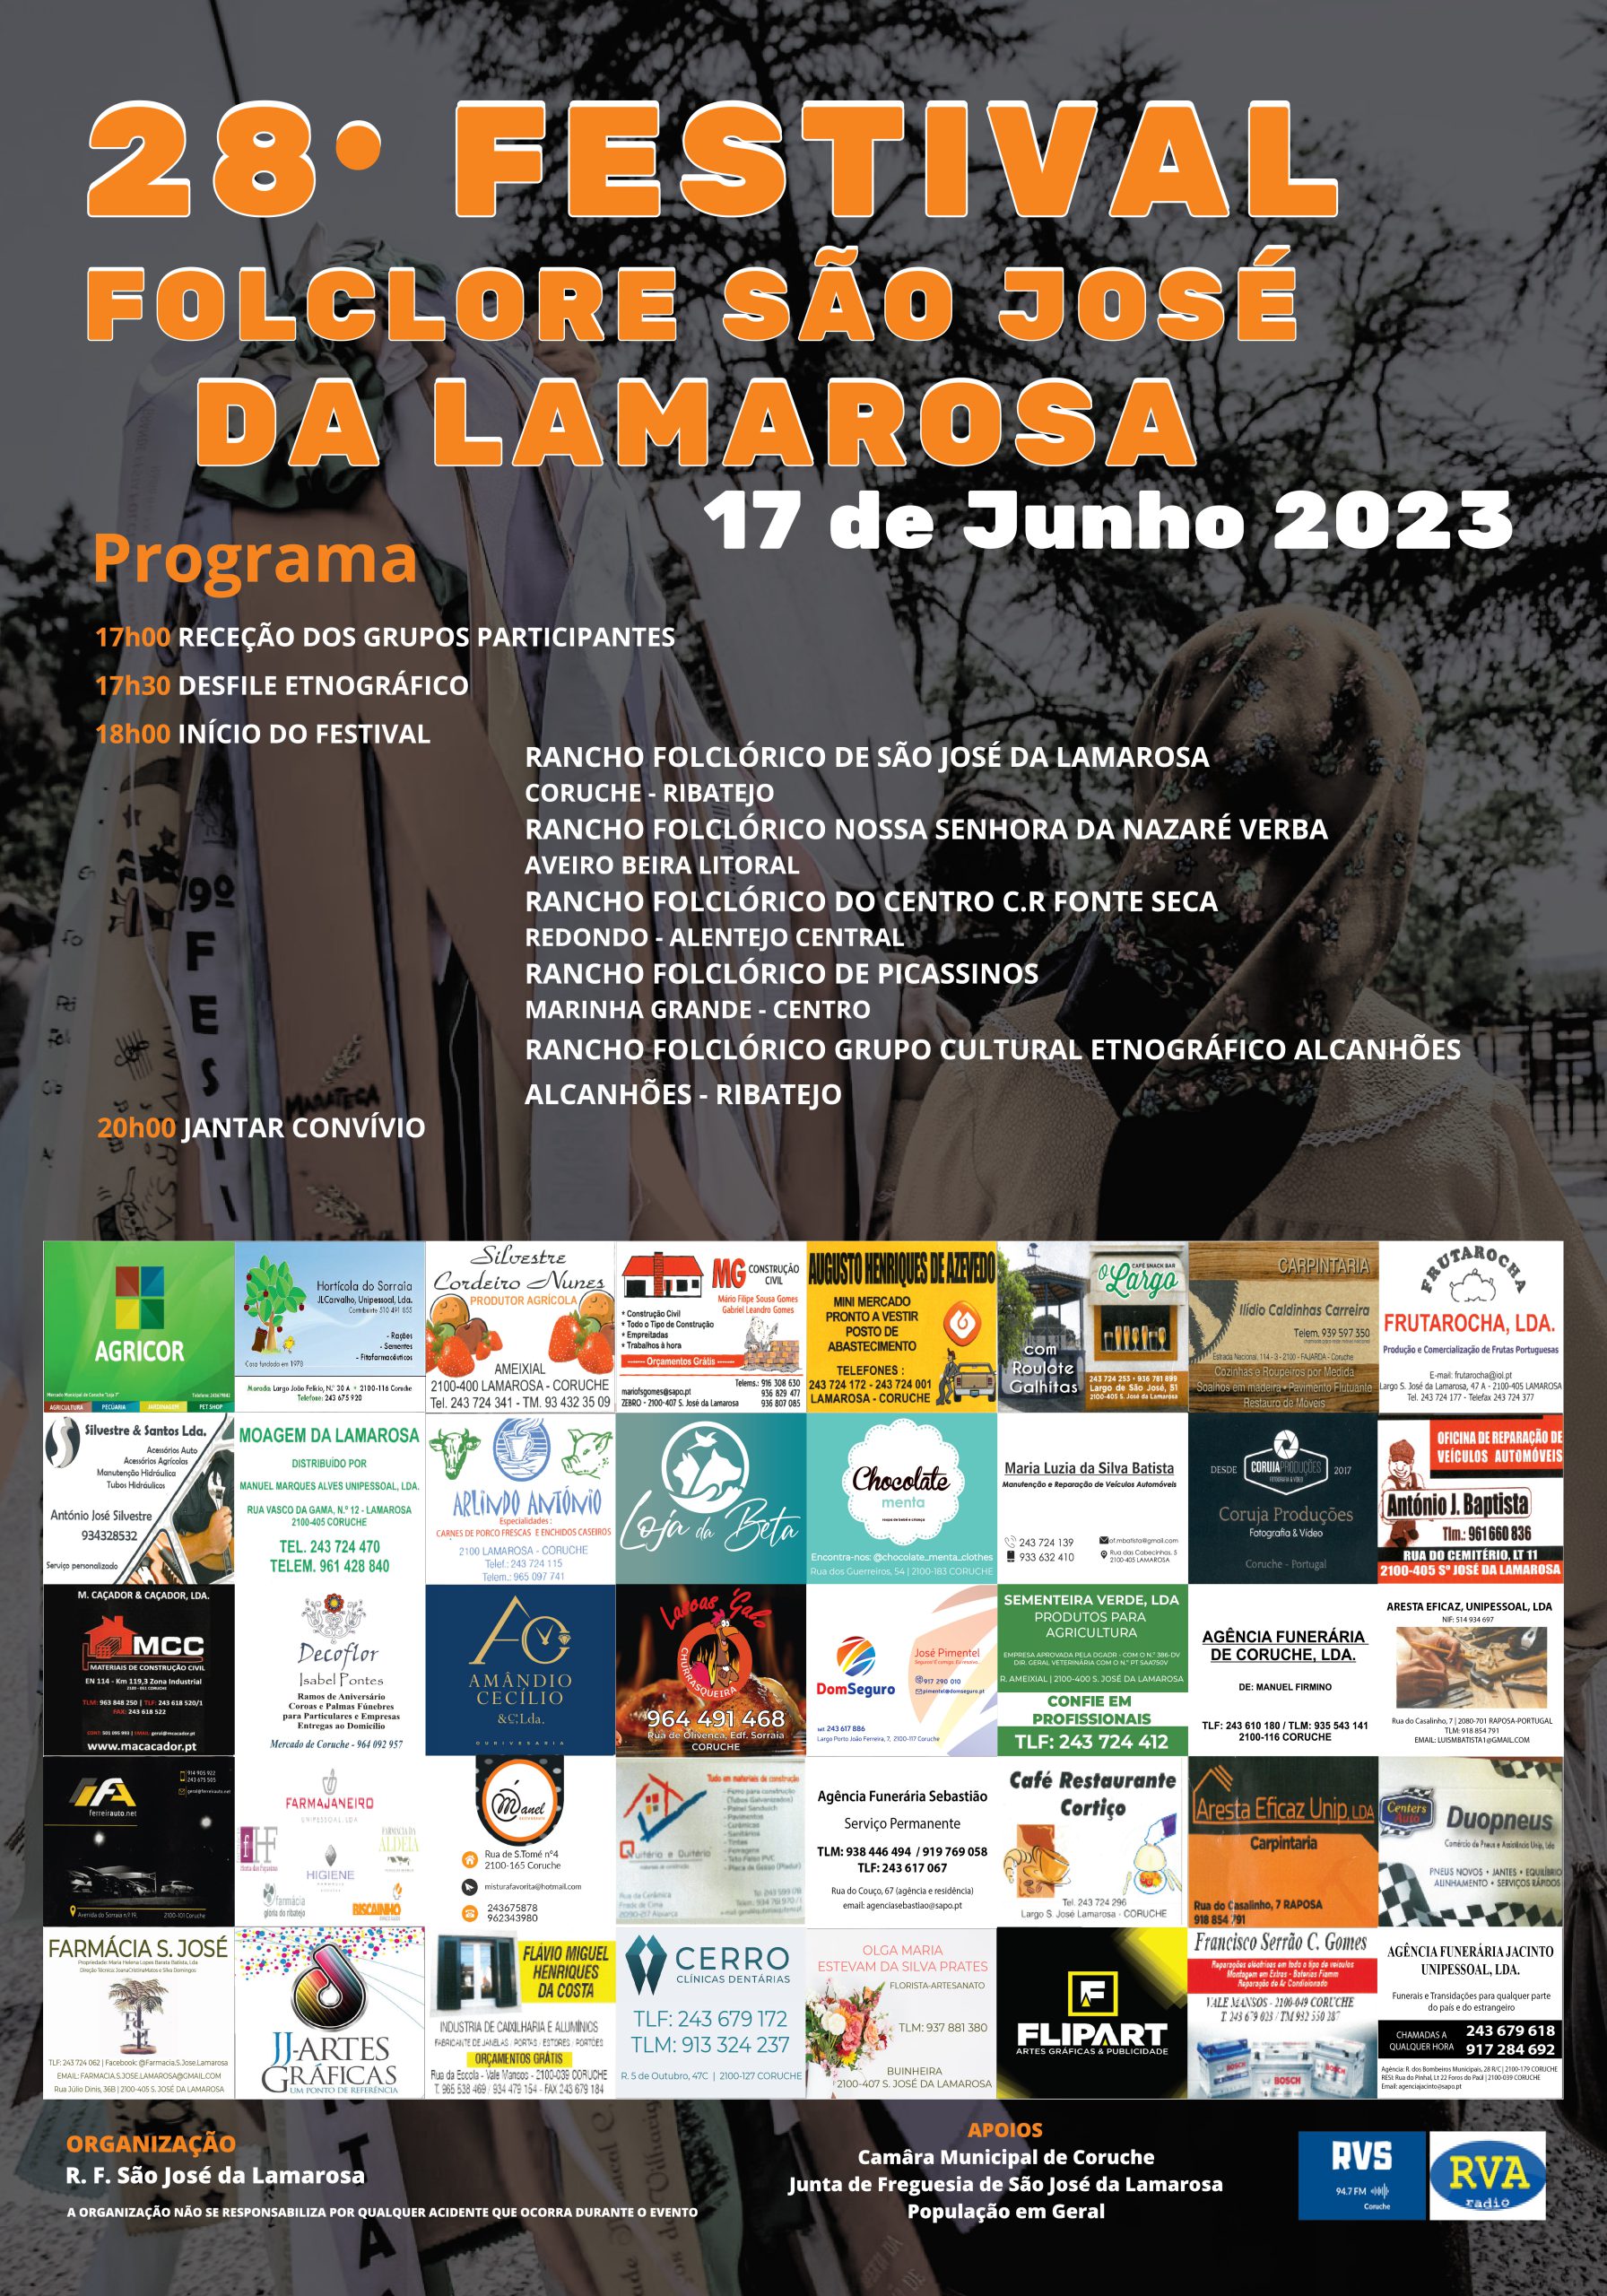 28º Festival de Folclore São José da Lamarosa